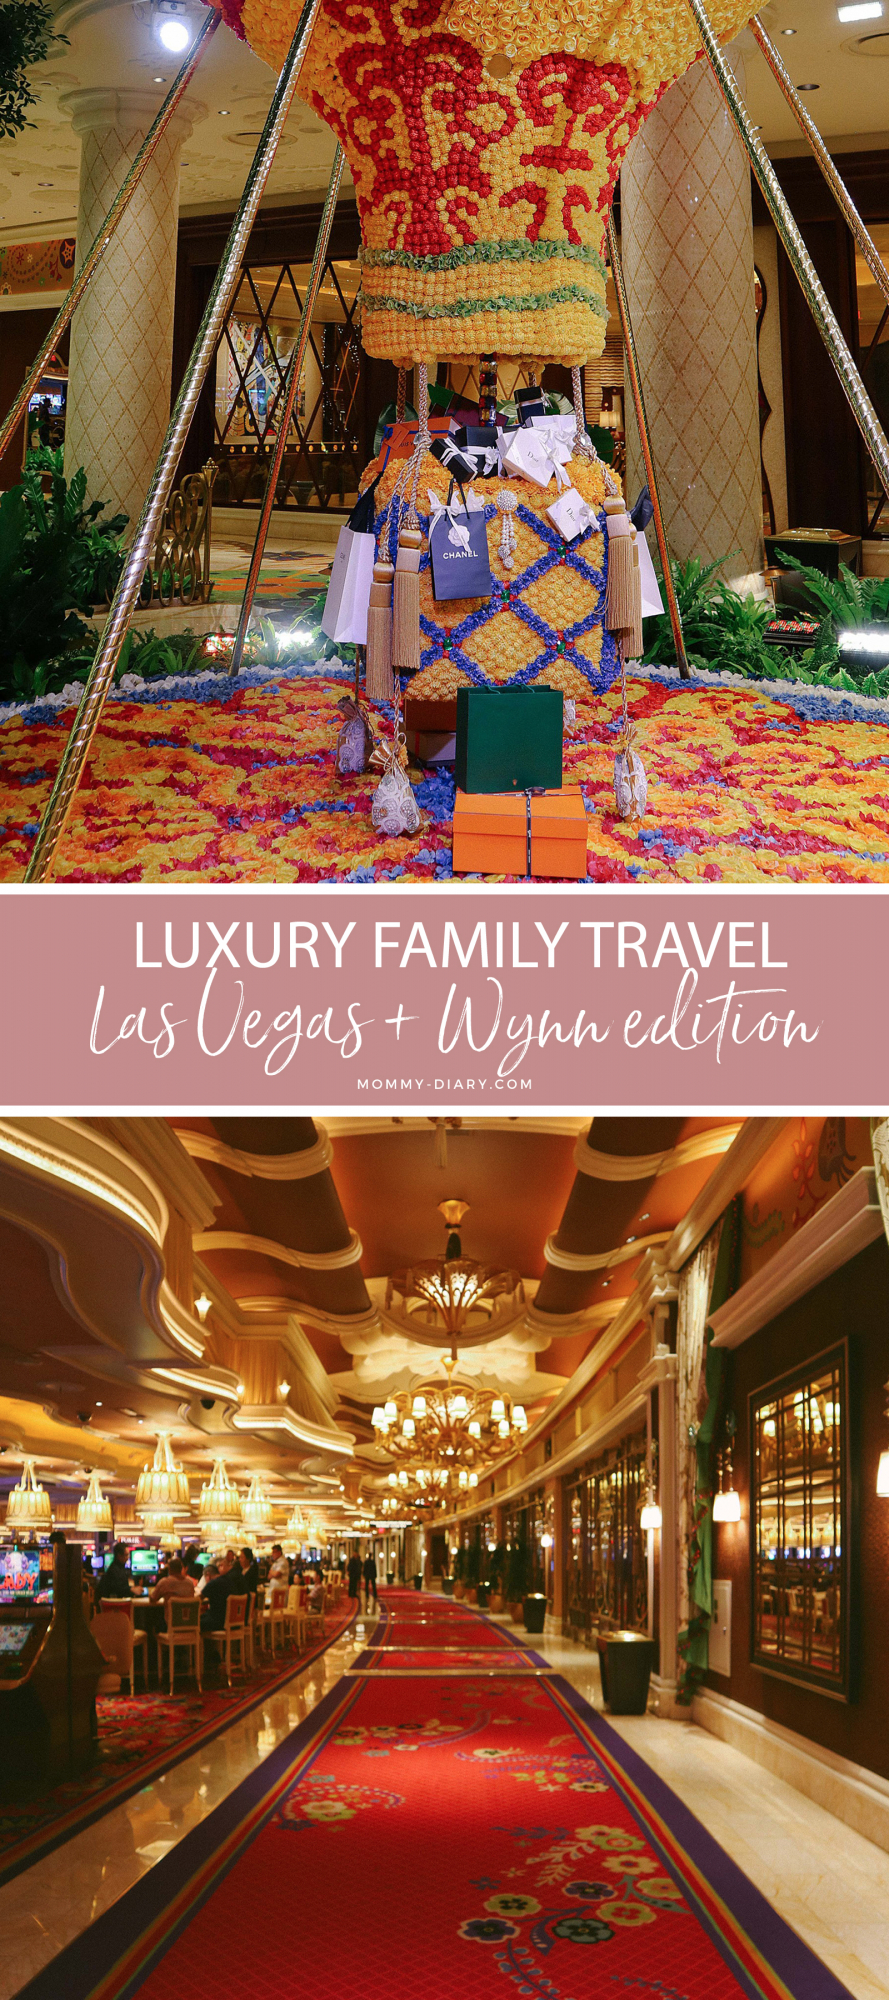 Las Vegas luxury family travel